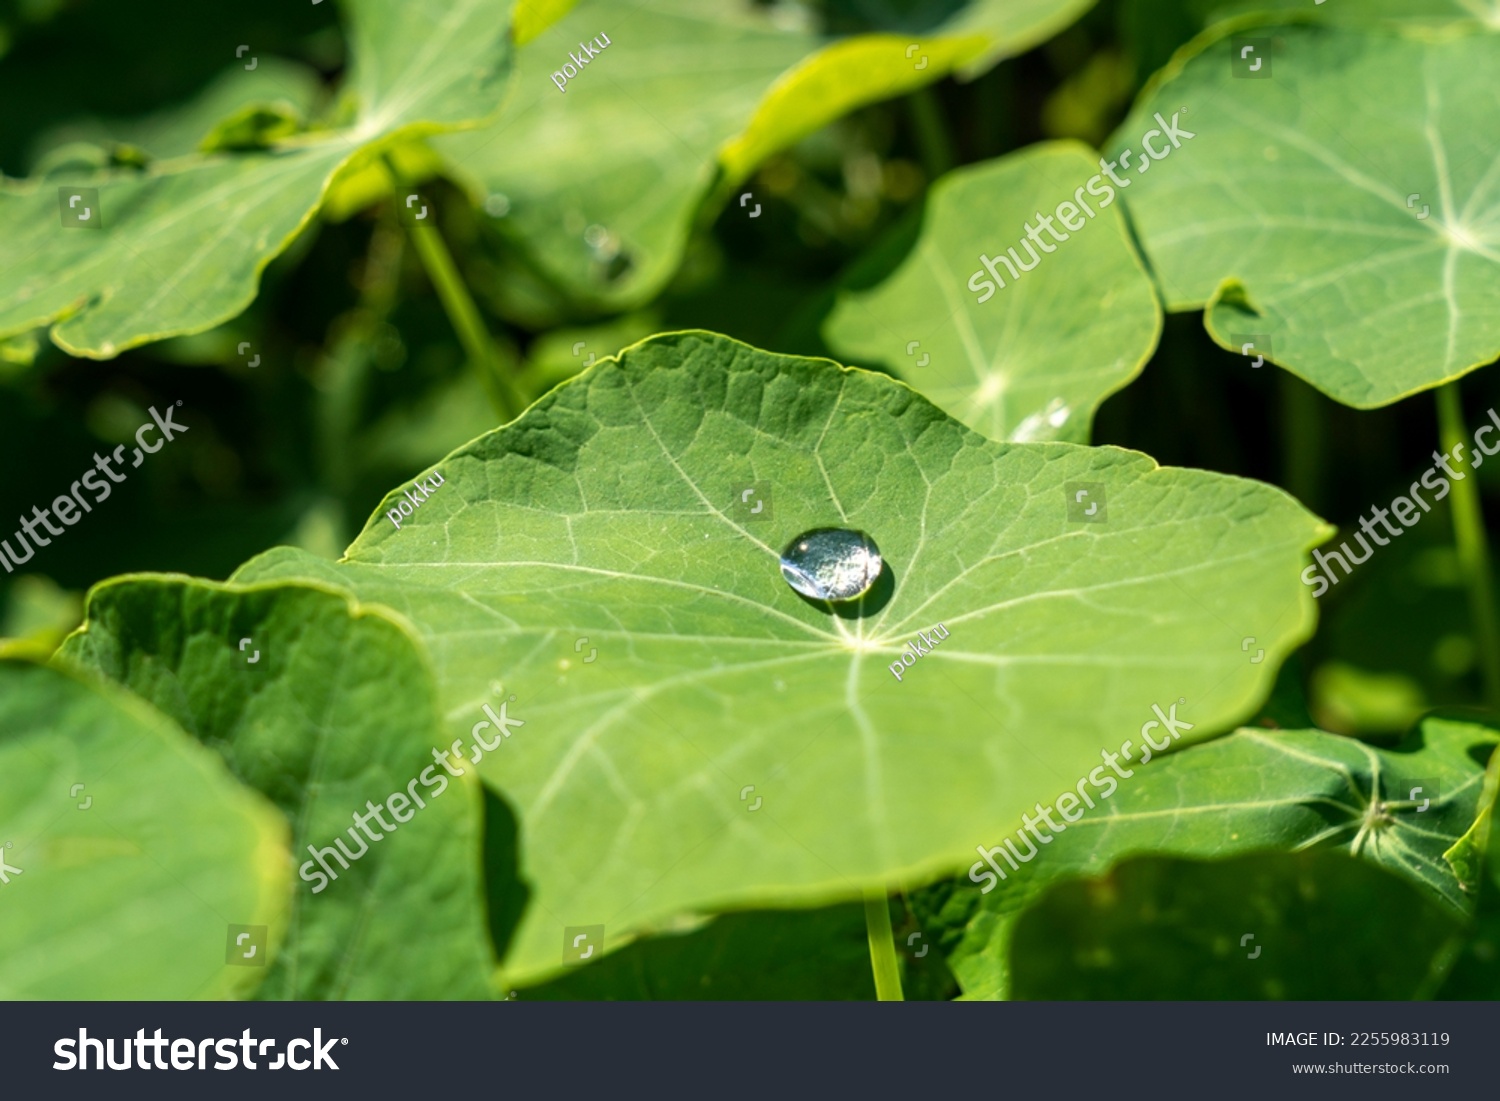 Big water drop on leaf #2255983119